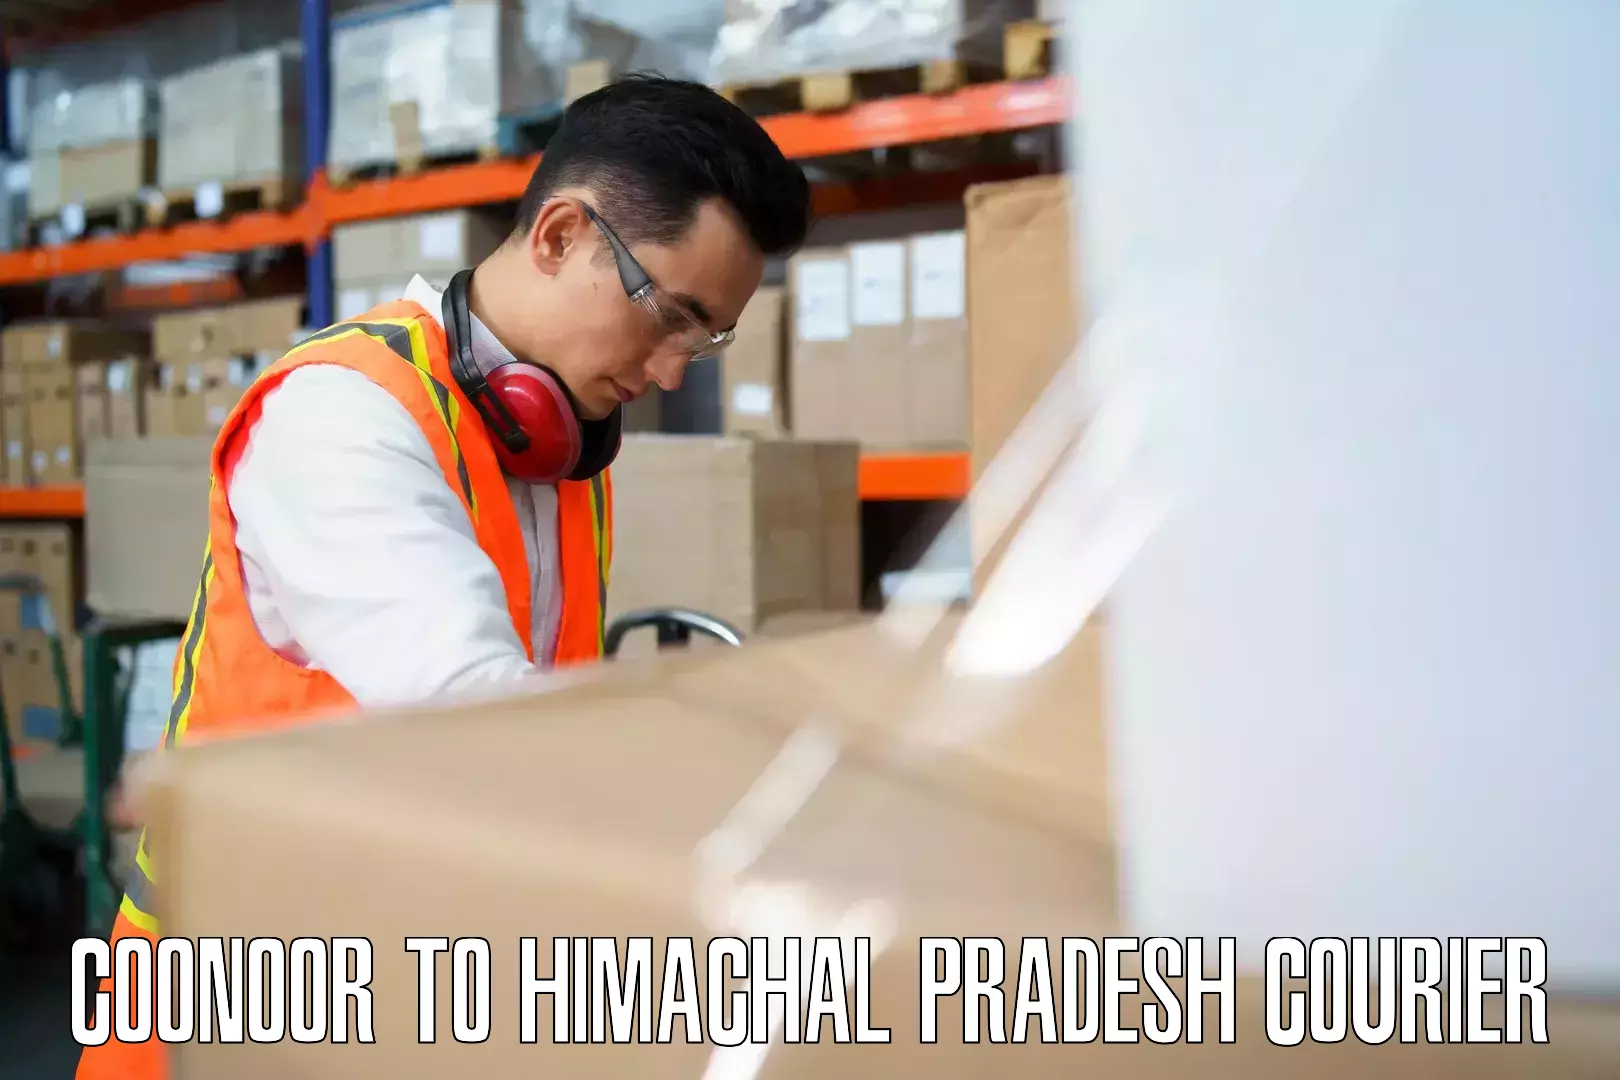 Luggage transport consultancy Coonoor to Himachal Pradesh